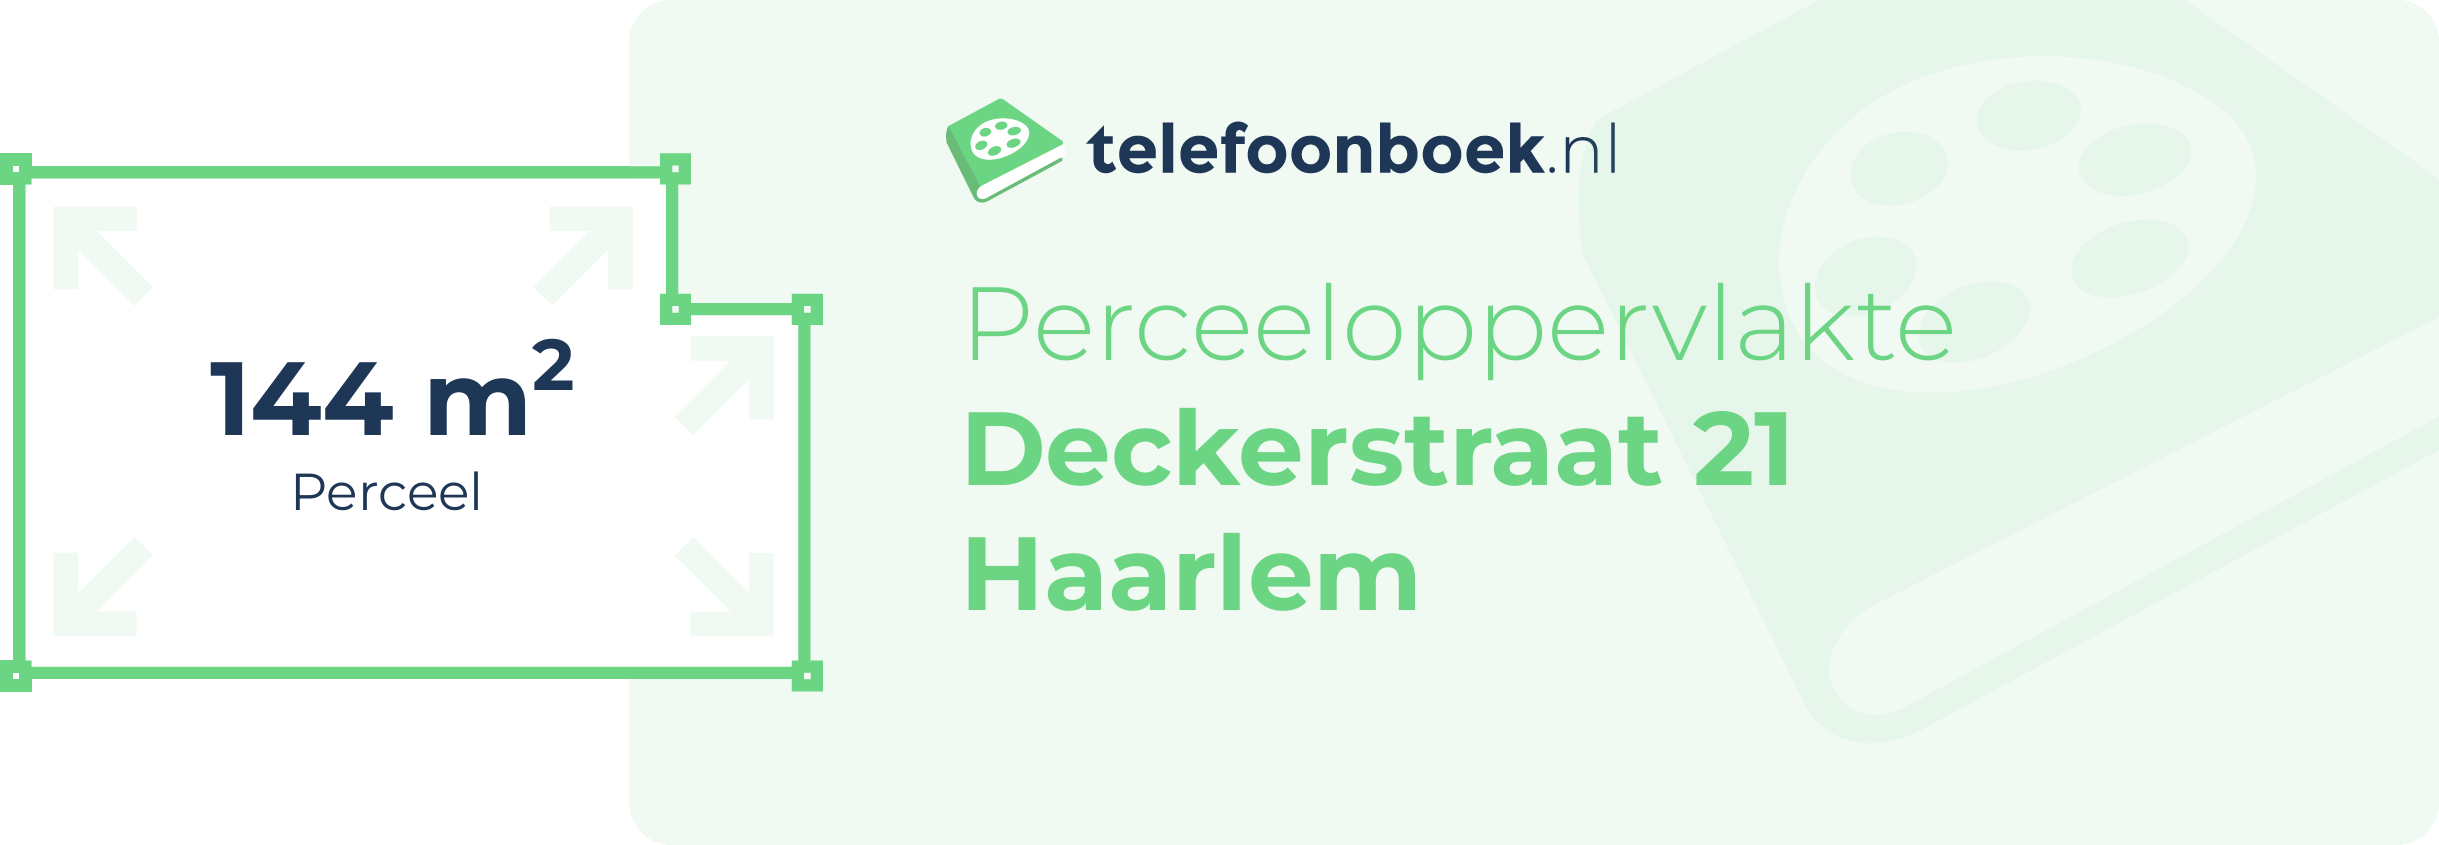 Perceeloppervlakte Deckerstraat 21 Haarlem